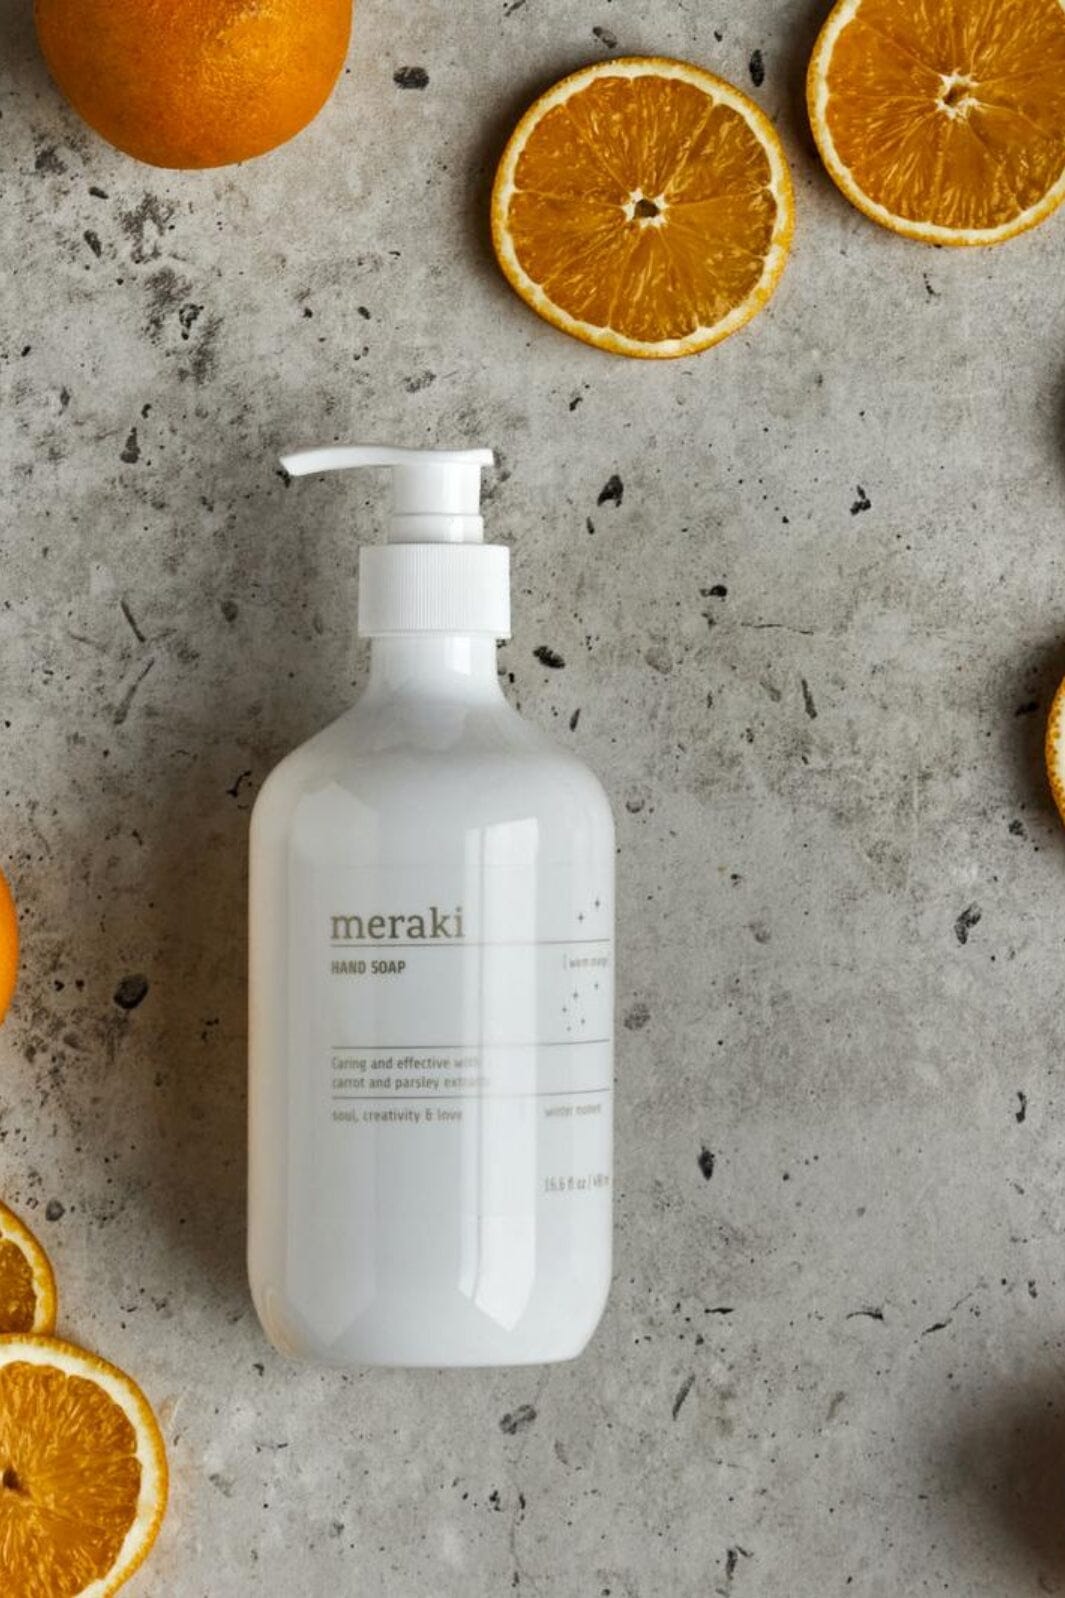 Meraki - Hand soap, Warm Orange, Winter Moment Håndsæber 